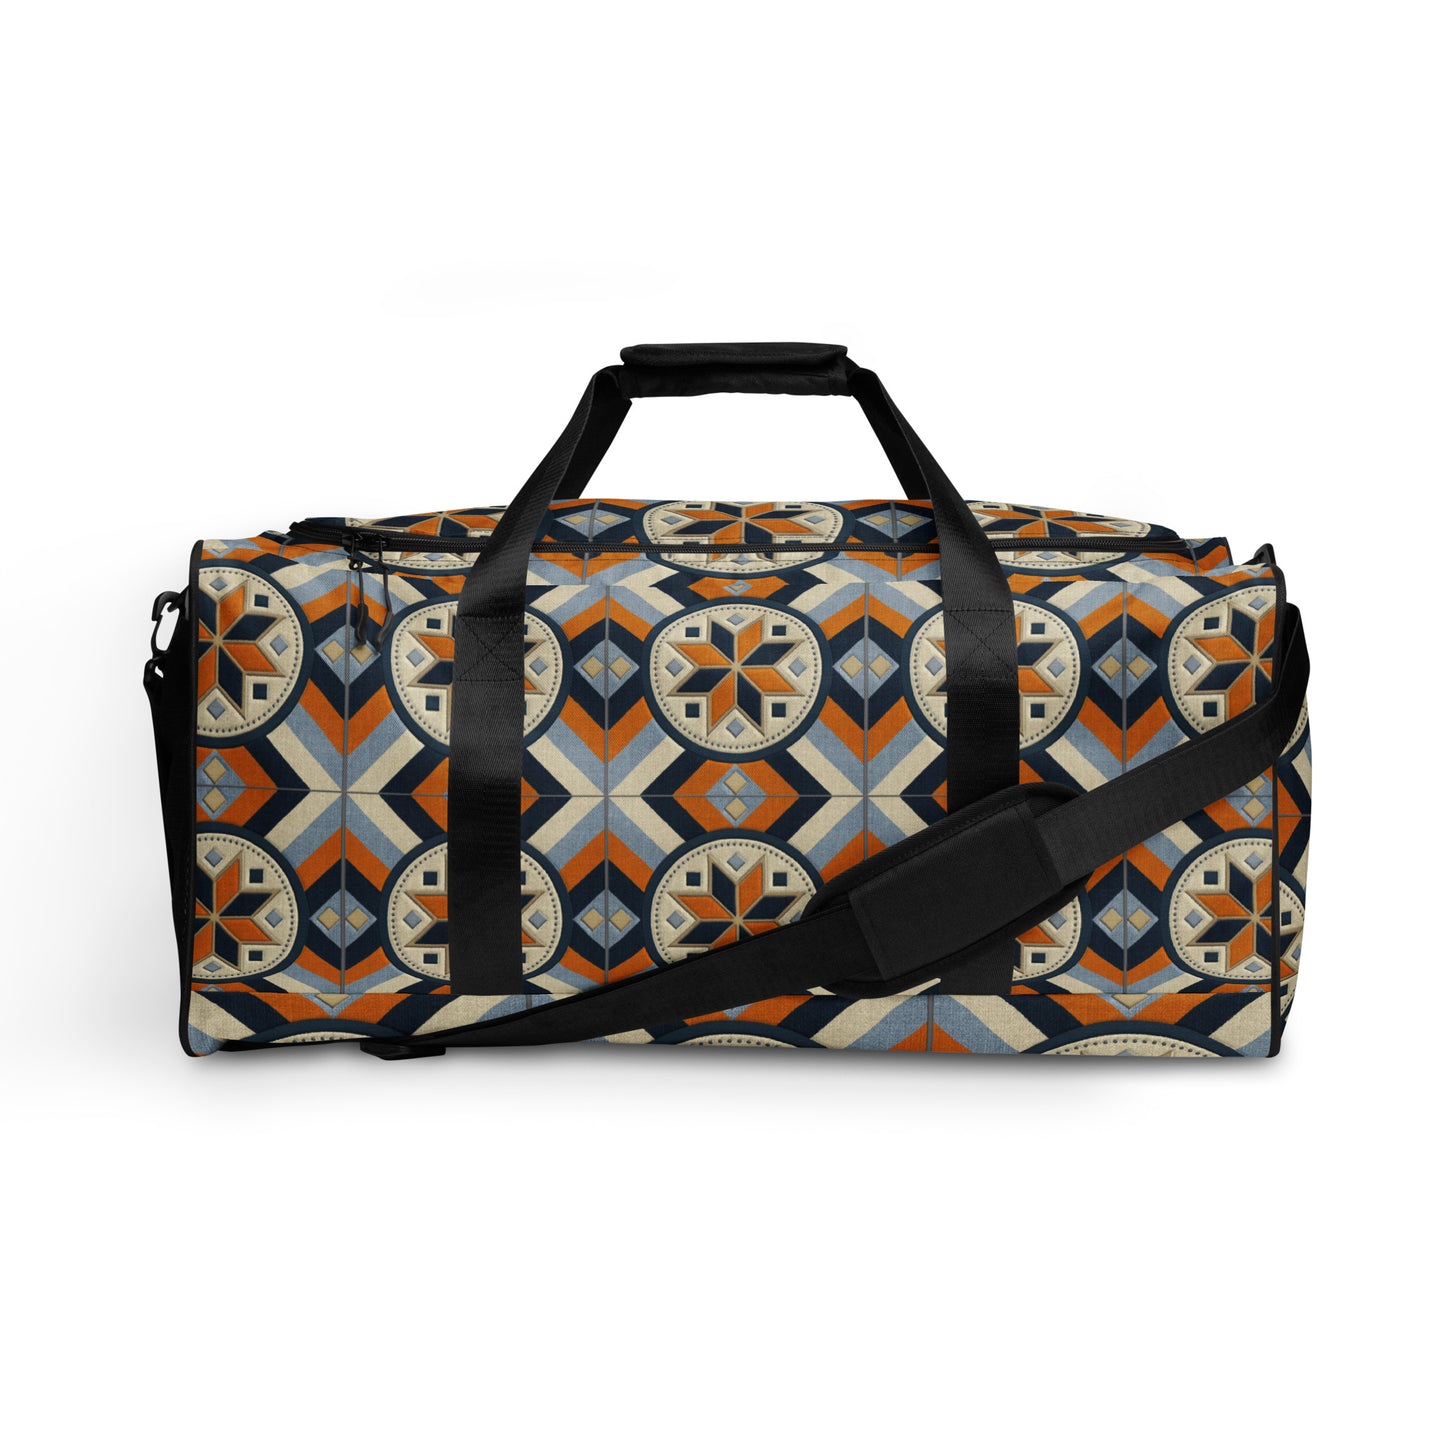 Duffle bag, gym bag, sports paraphernalia, travel bag